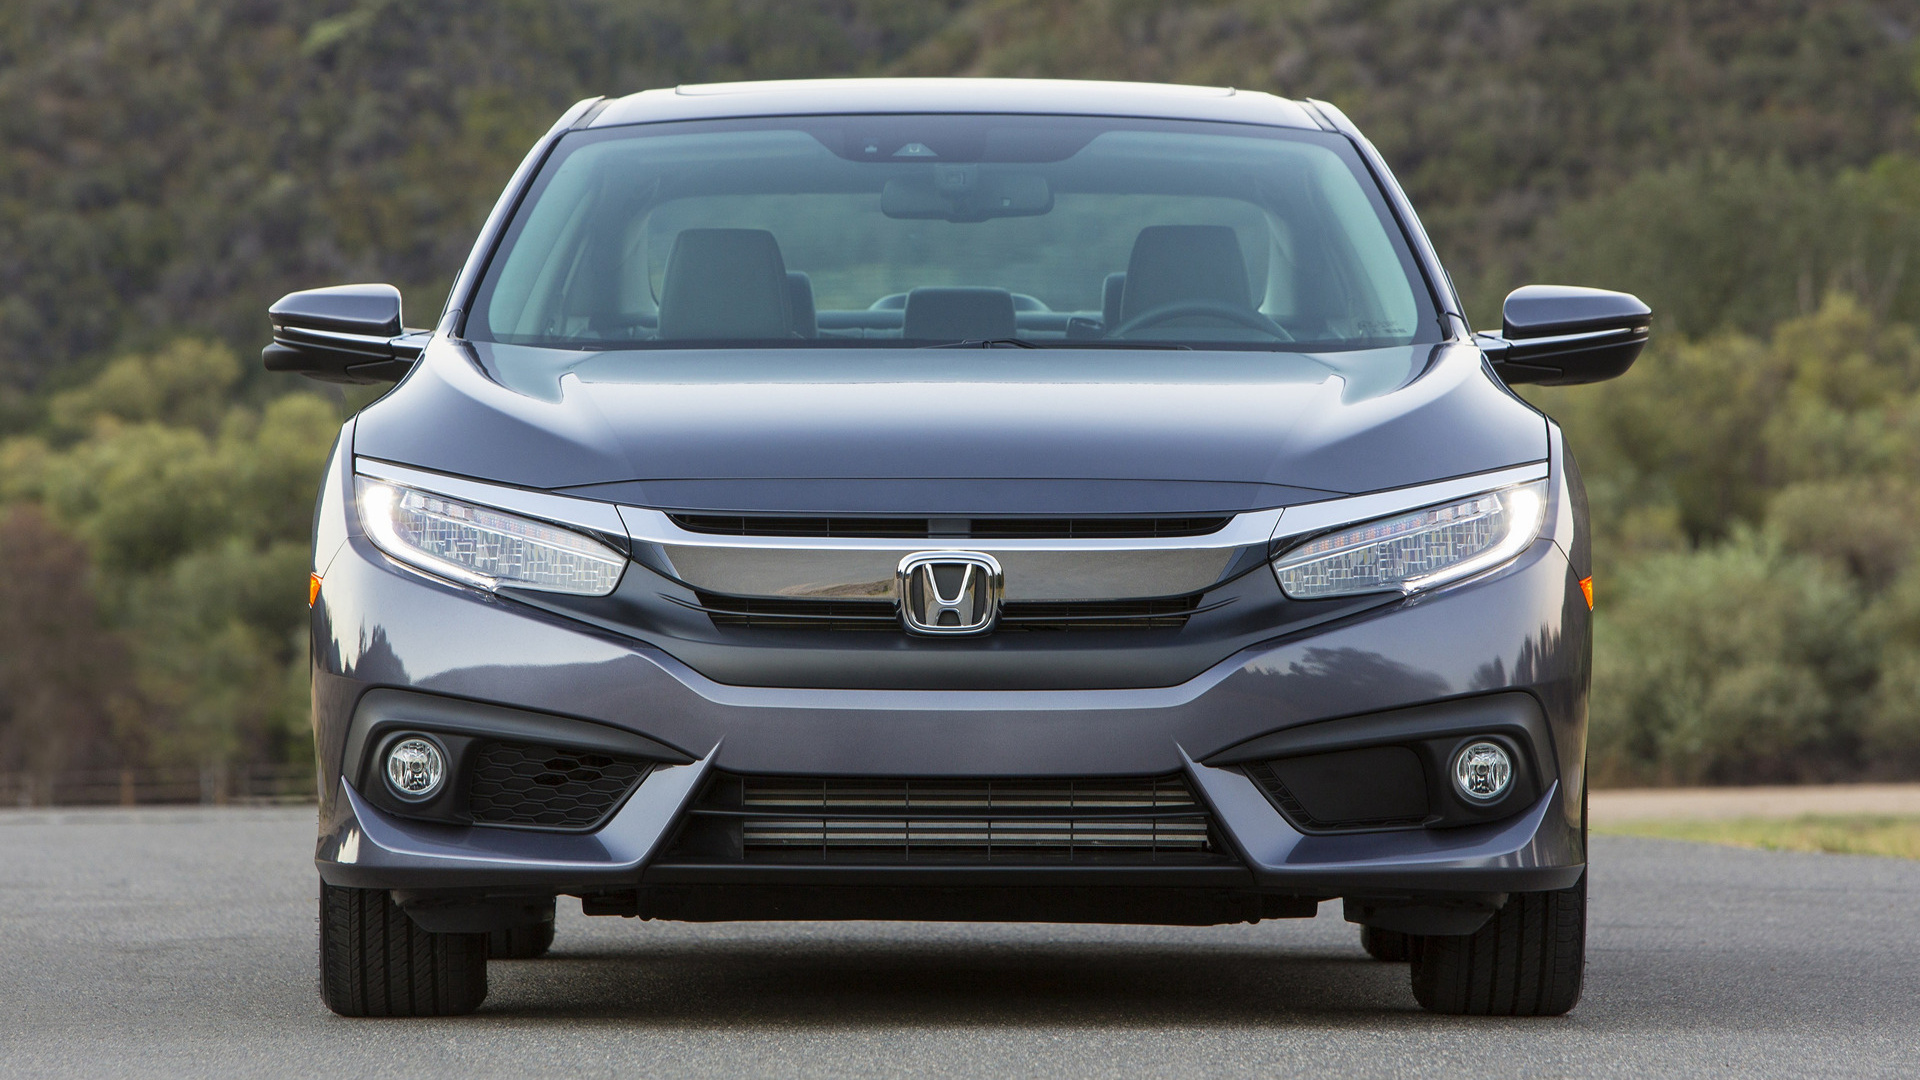 Honda Civic 2019 Front View - HD Wallpaper 